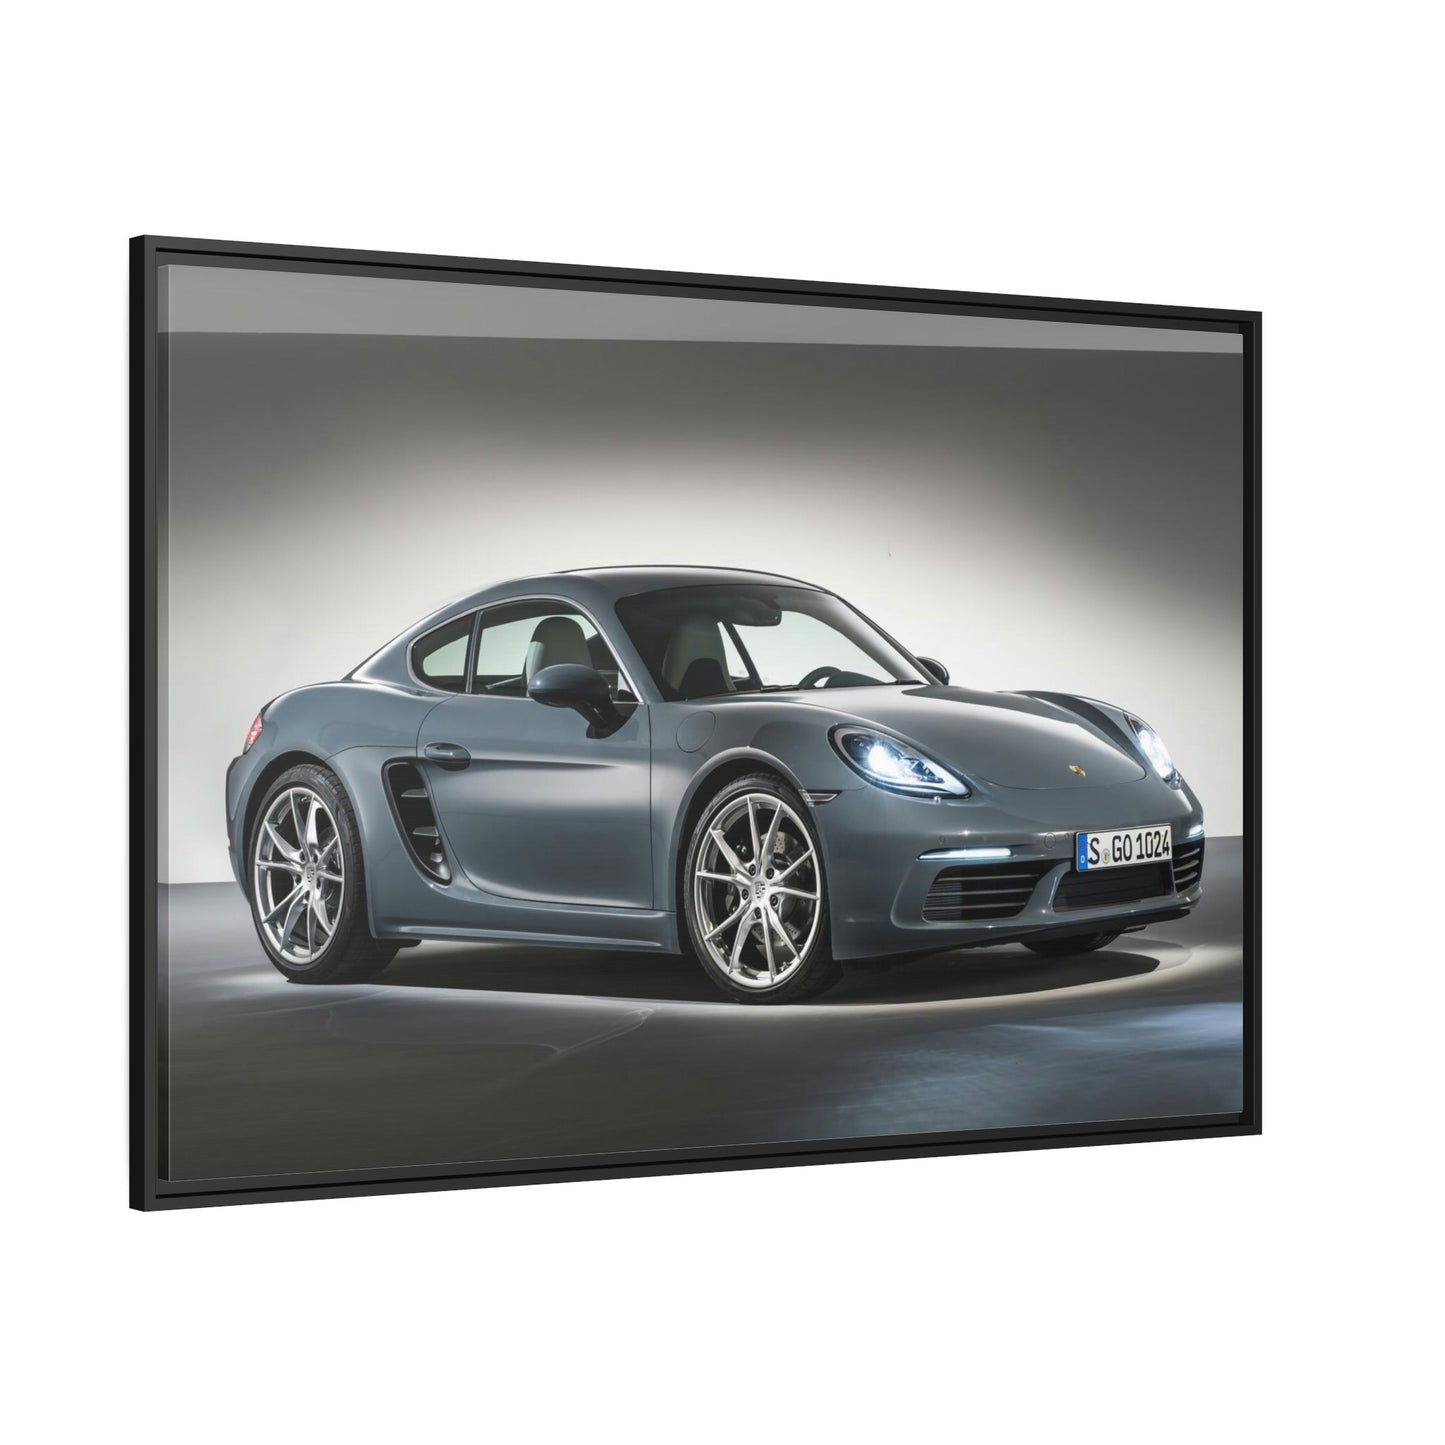 A Porsche Symphony: A Canvas & Poster Print of a Sports Car's Sleek Design